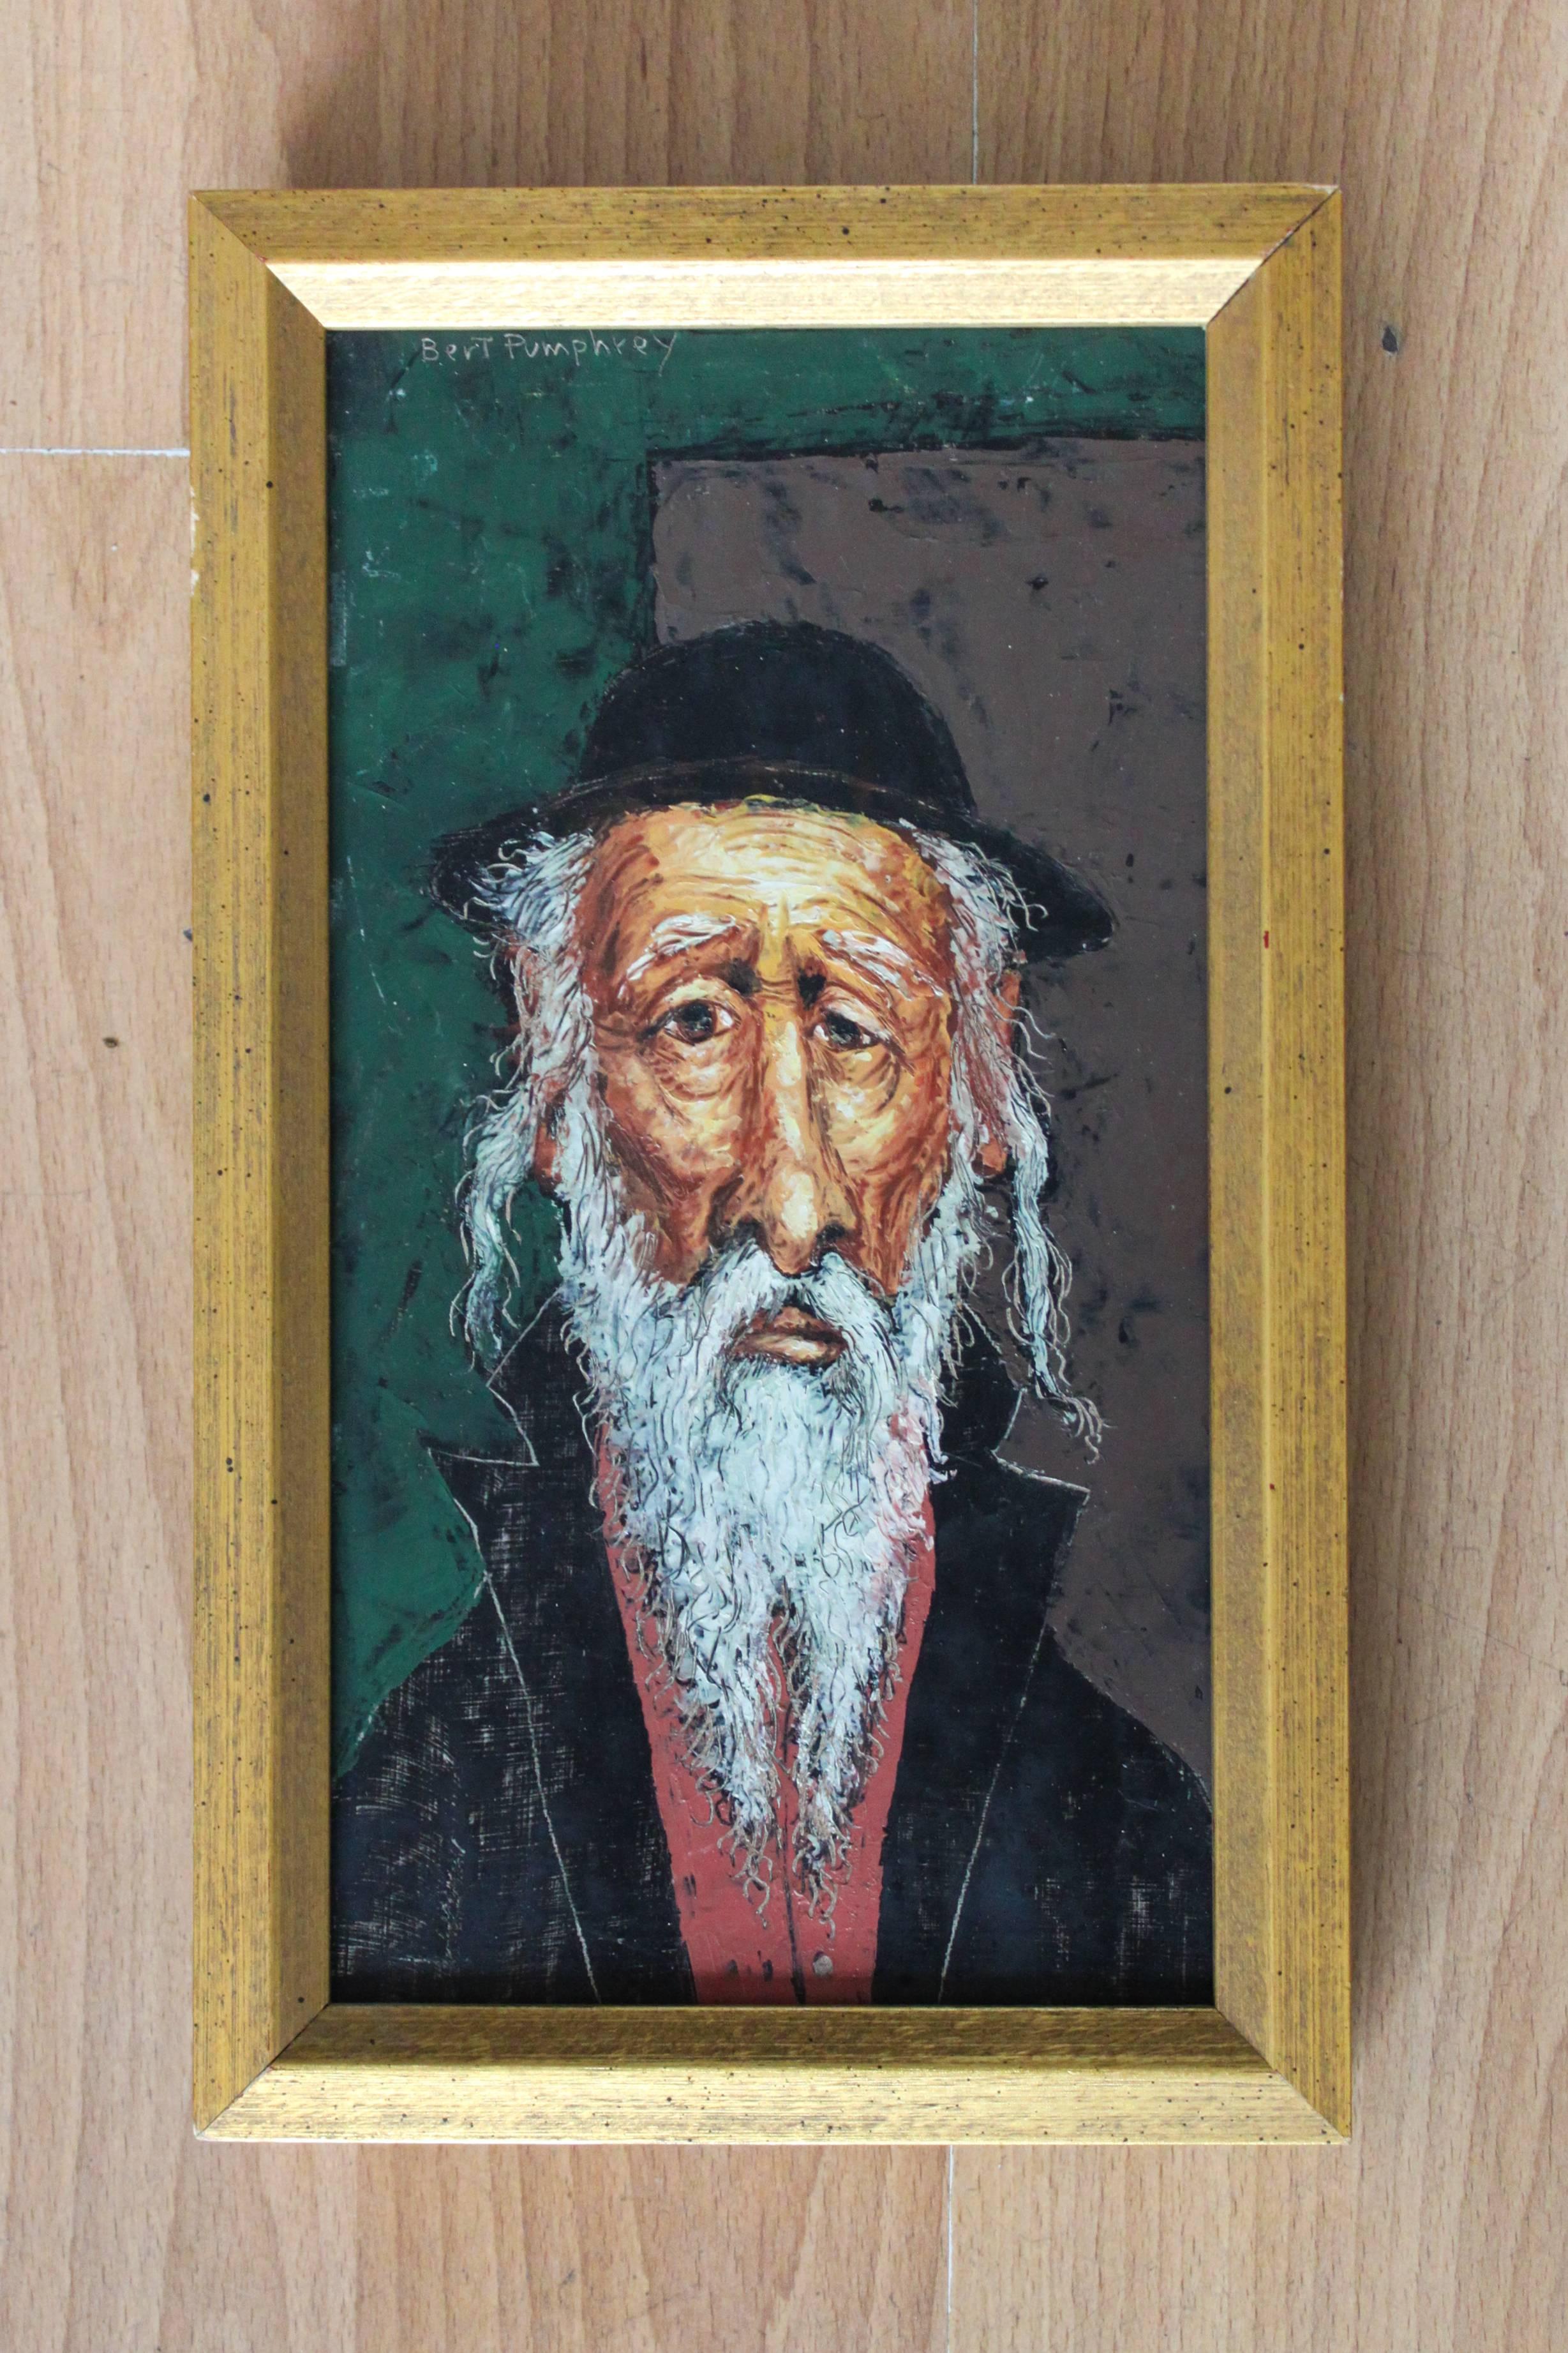 Hasidic - Painting by Bert Pumphrey